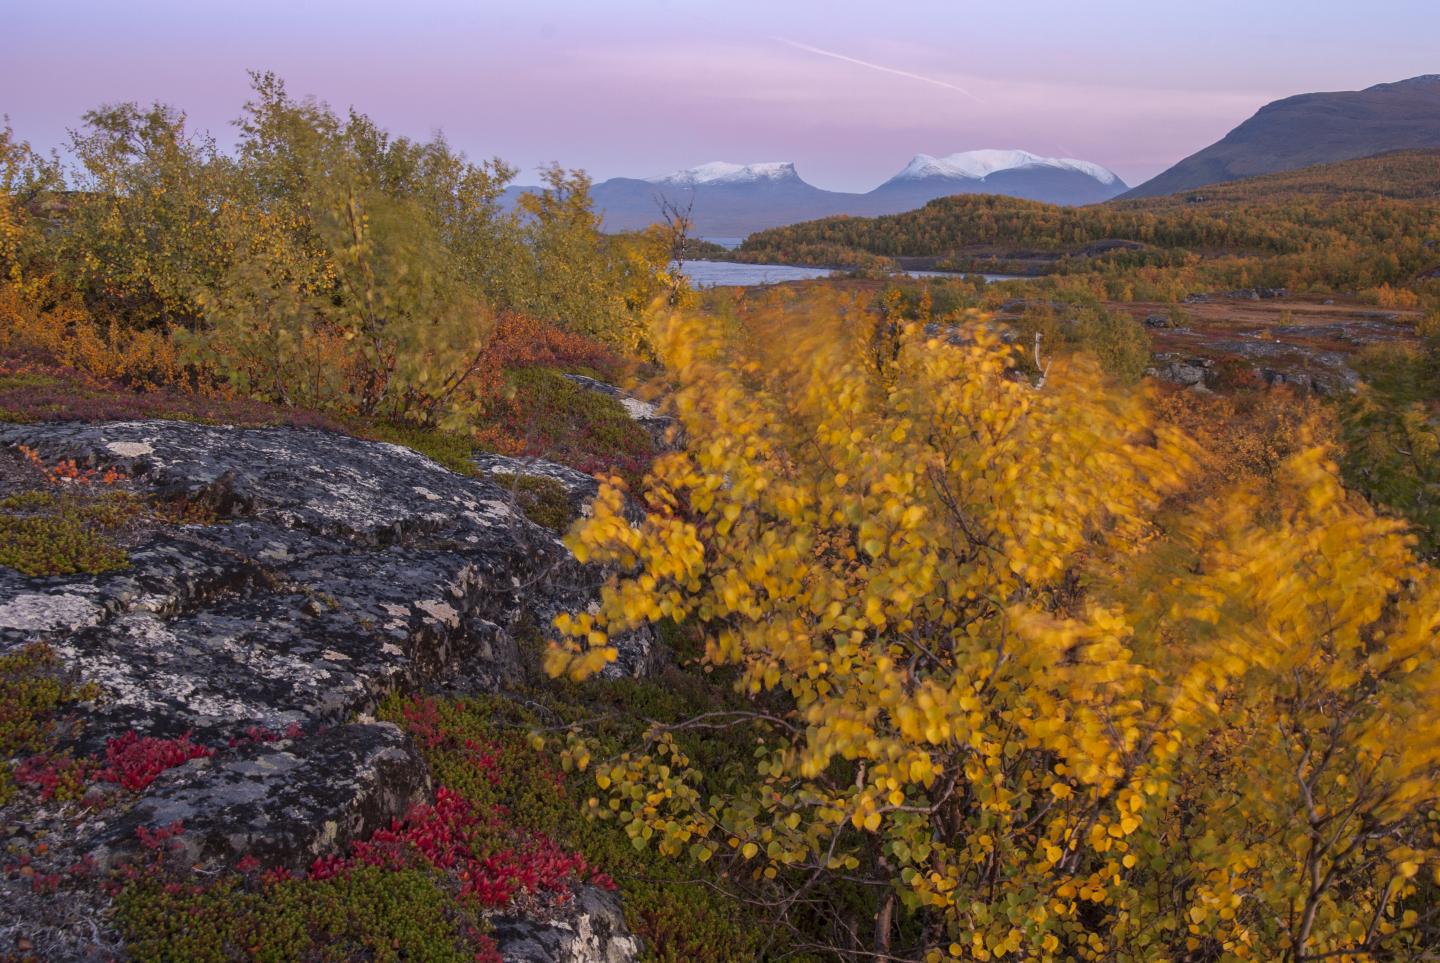 Tundra Landscape